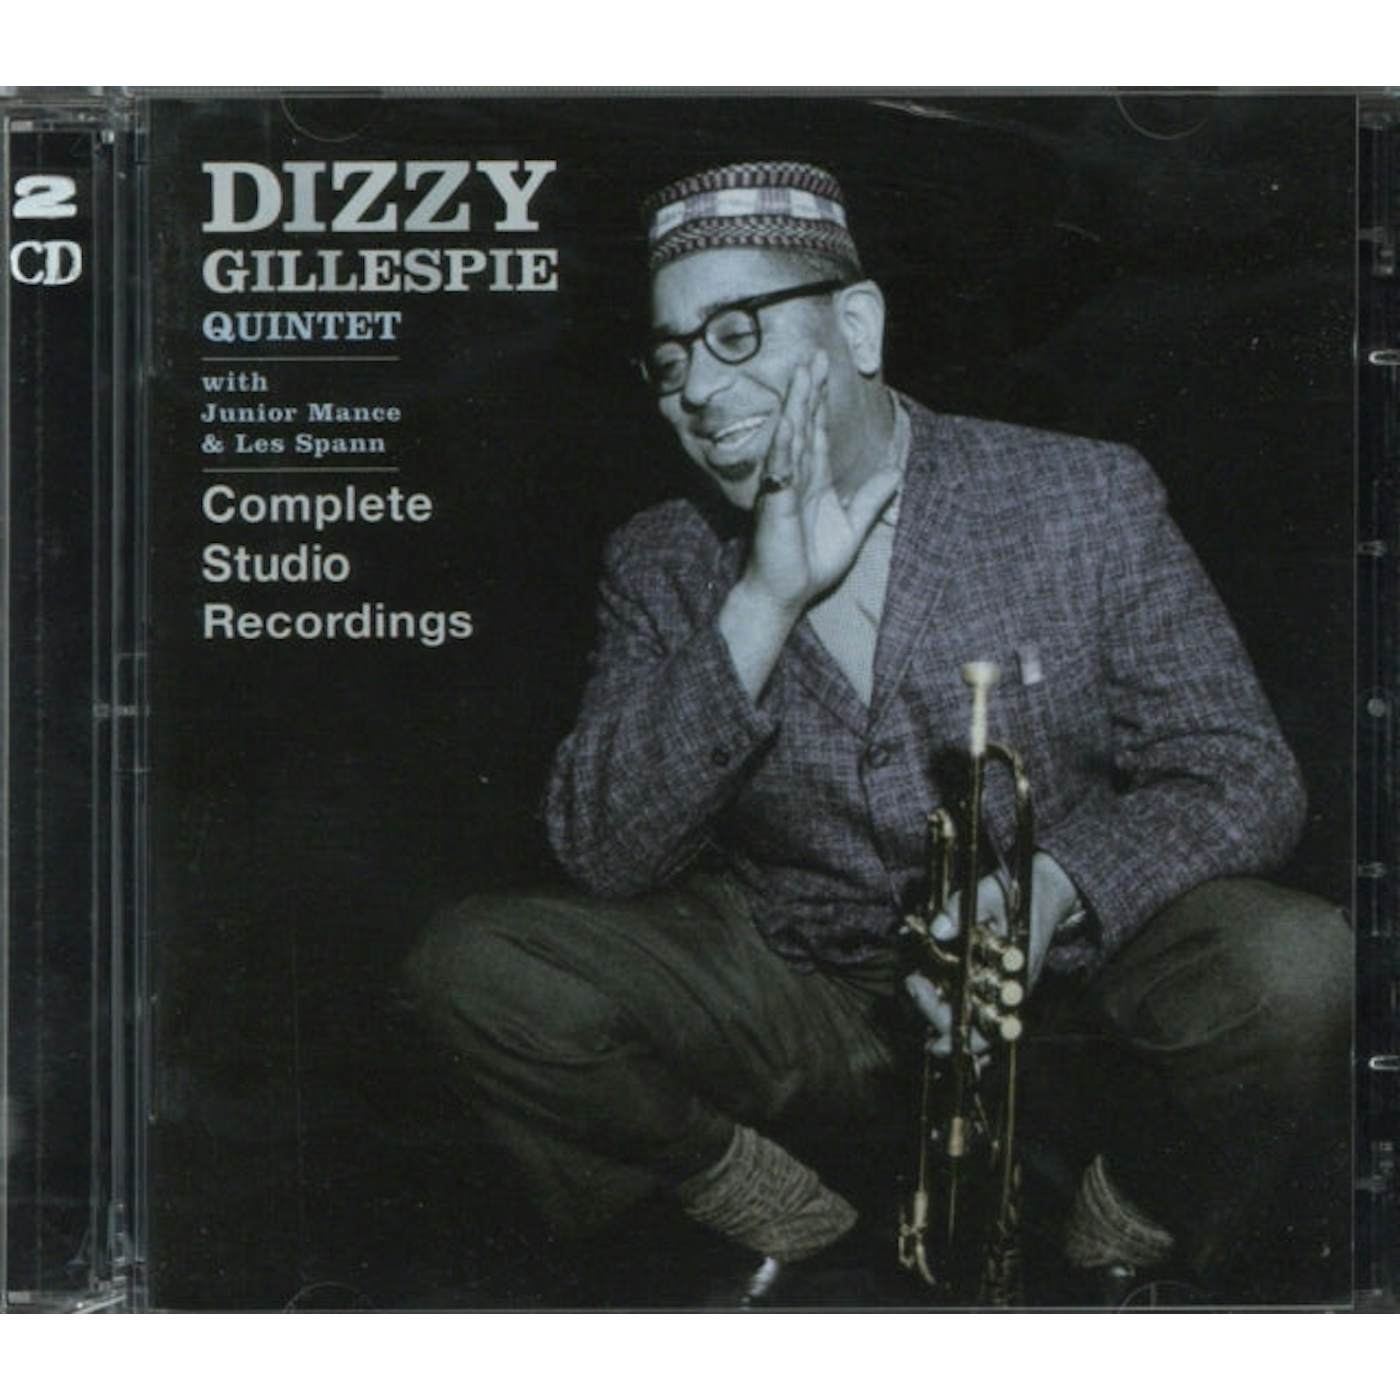 Dizzy Gillespie CD - Complete Studio Recordings